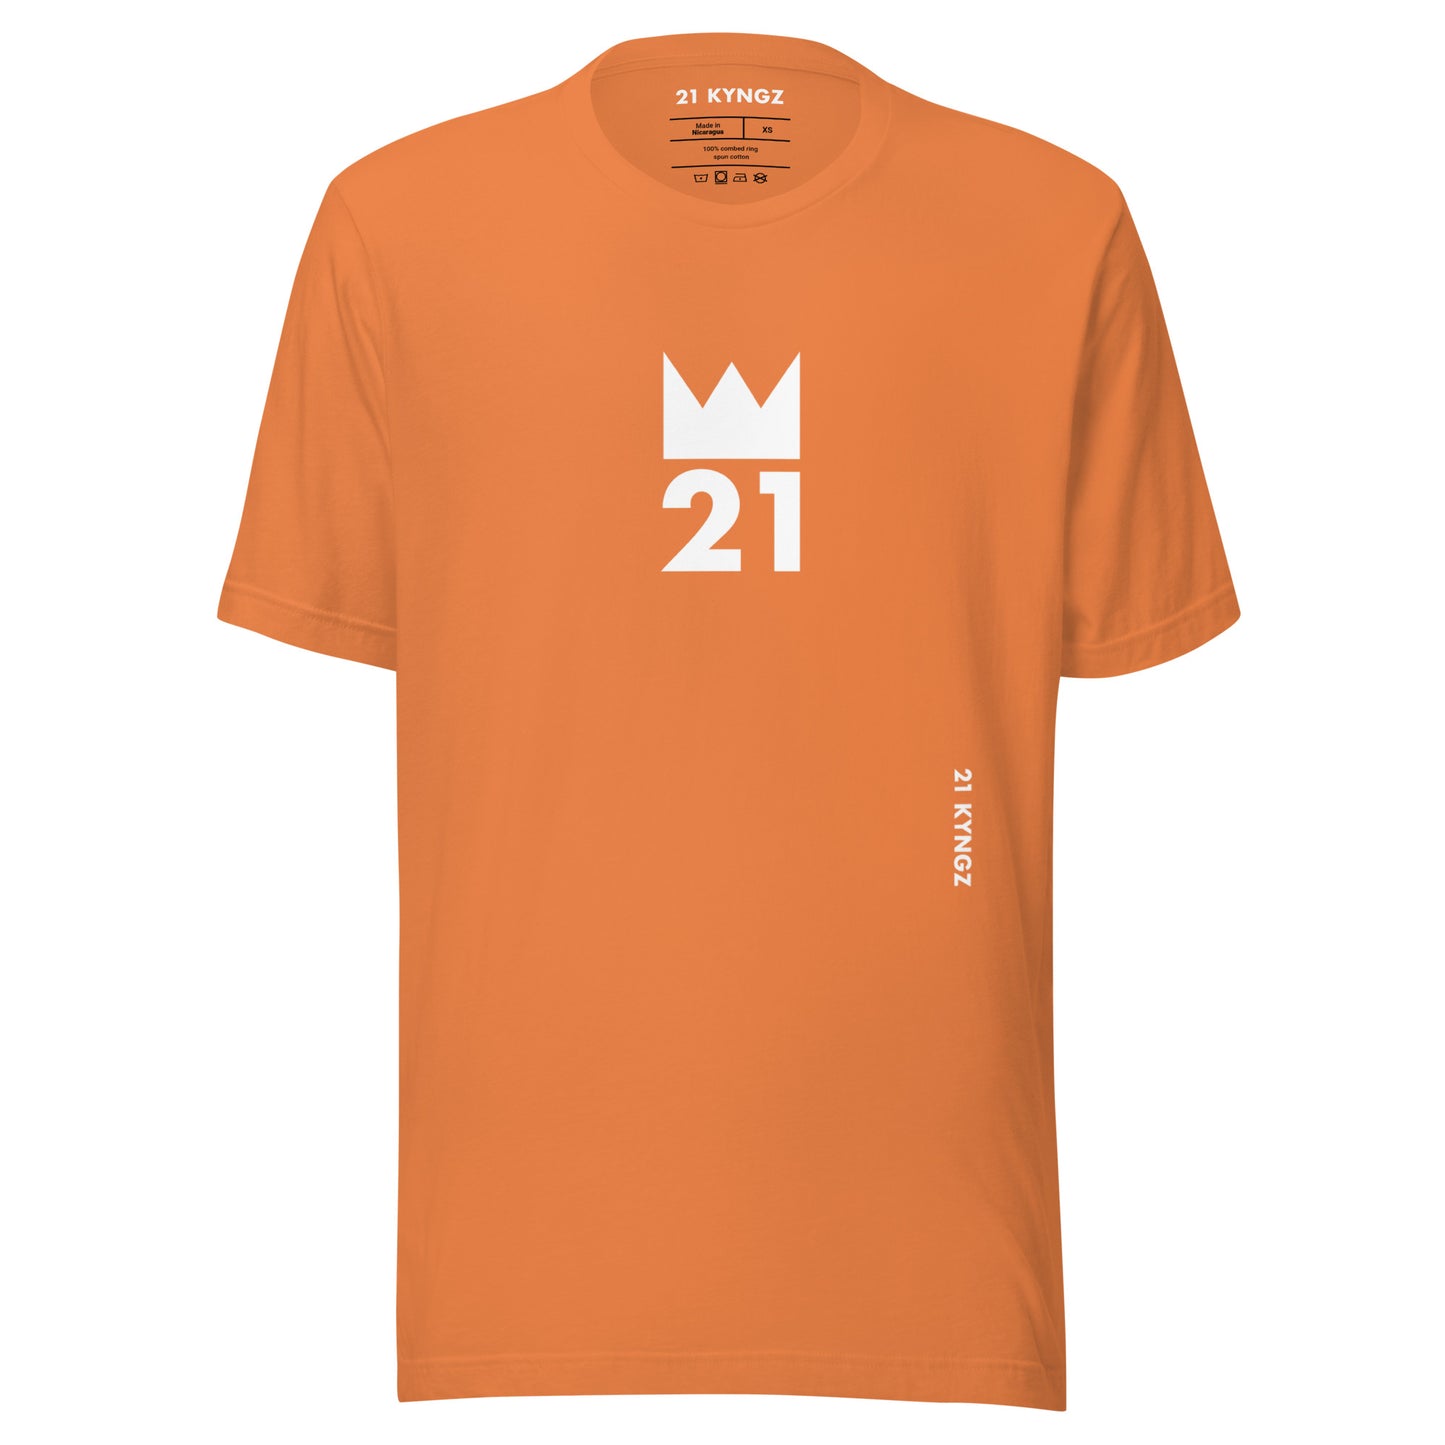 21 KYNGZ (Wh)2 t-shirt